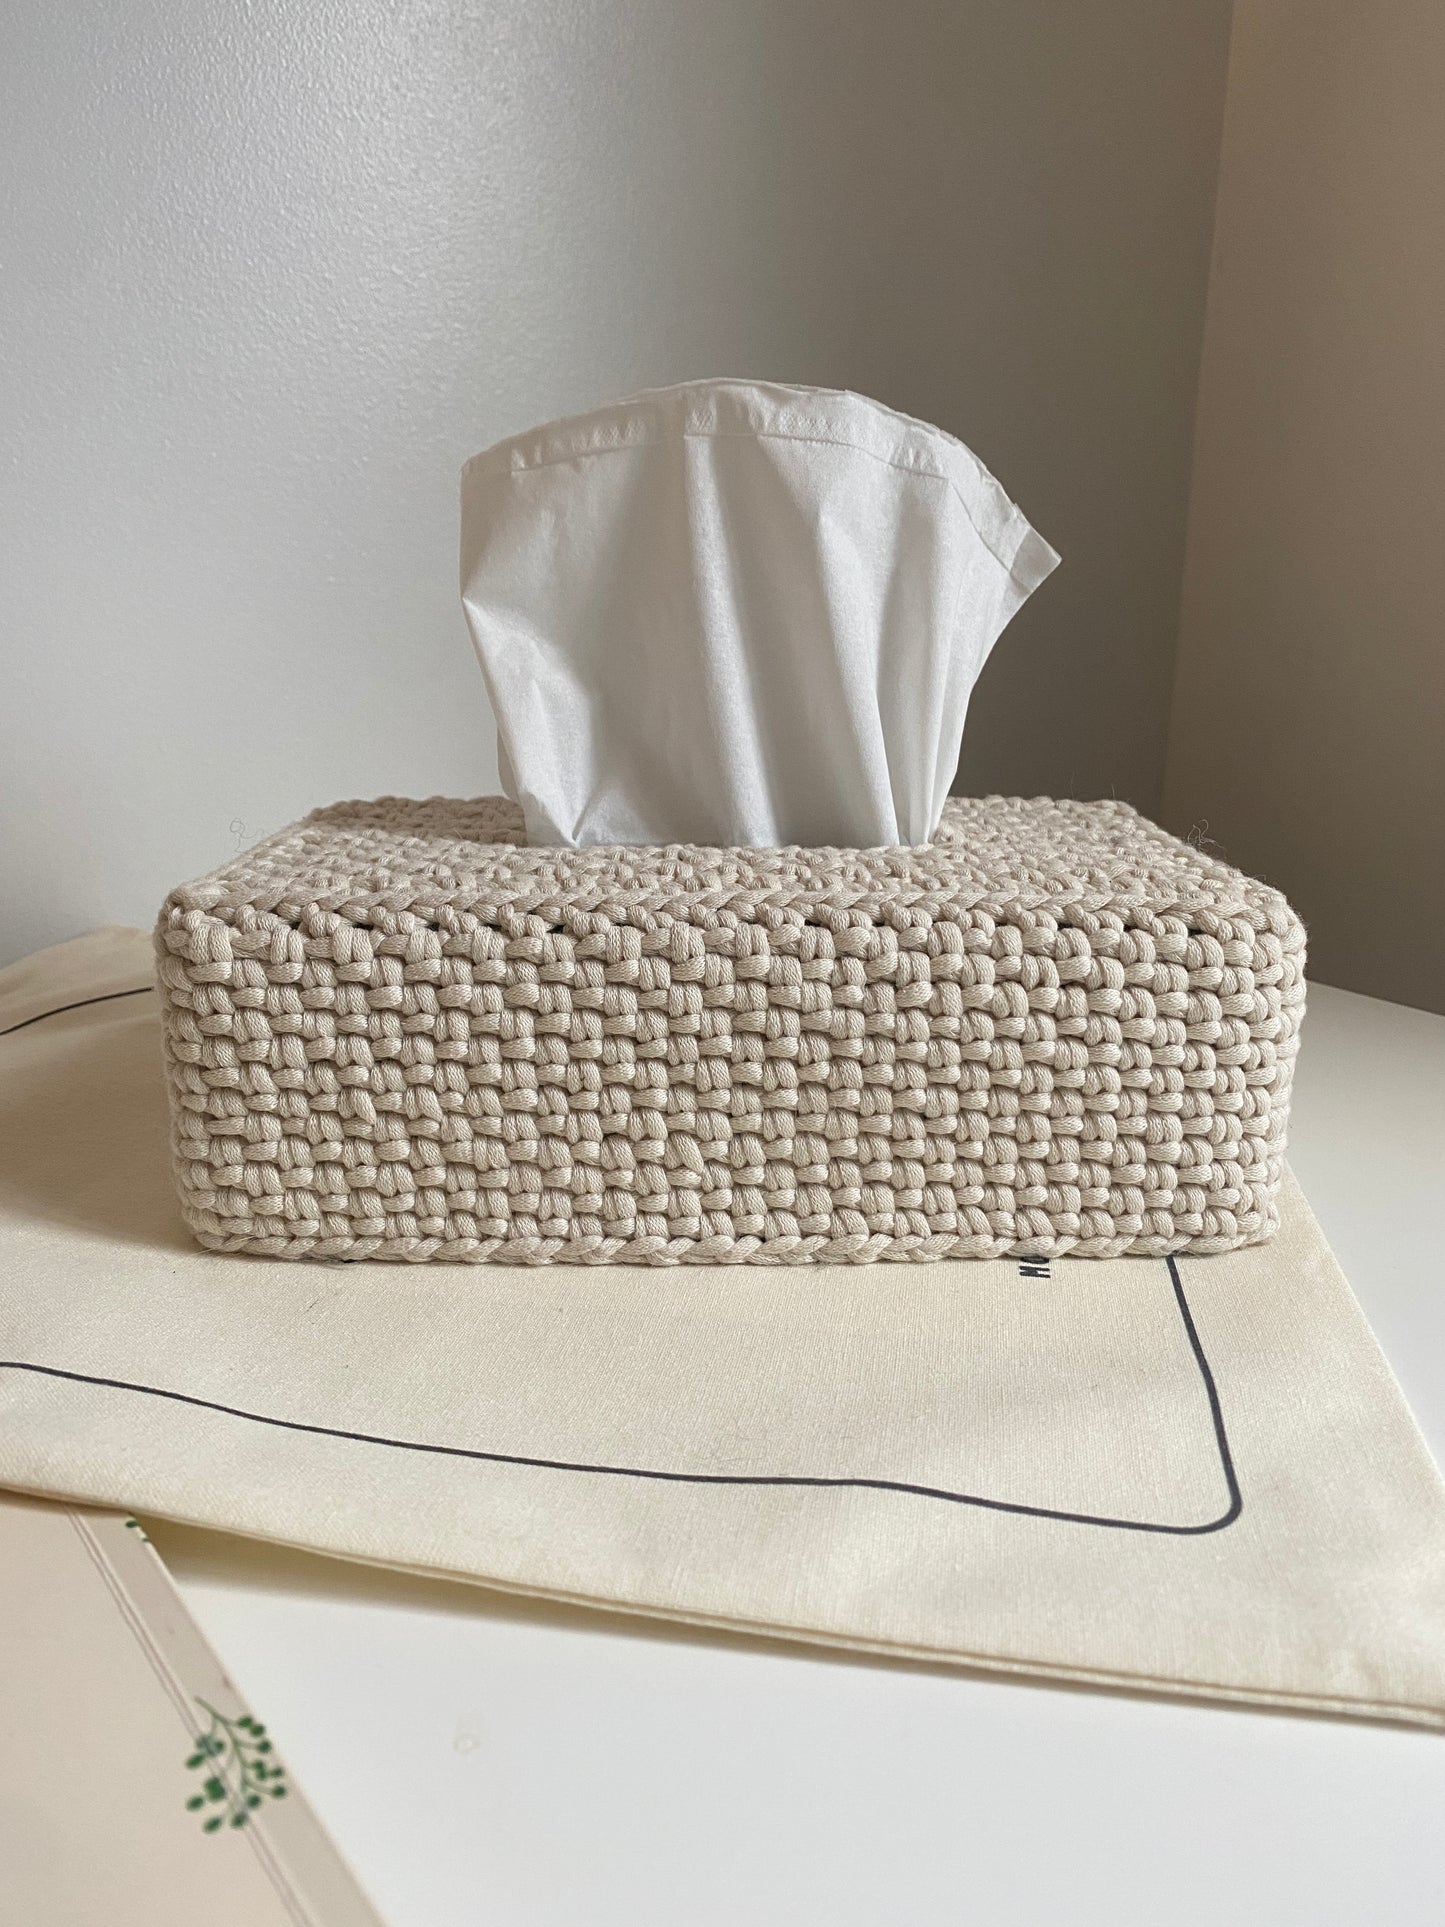 Typical Tissue Box